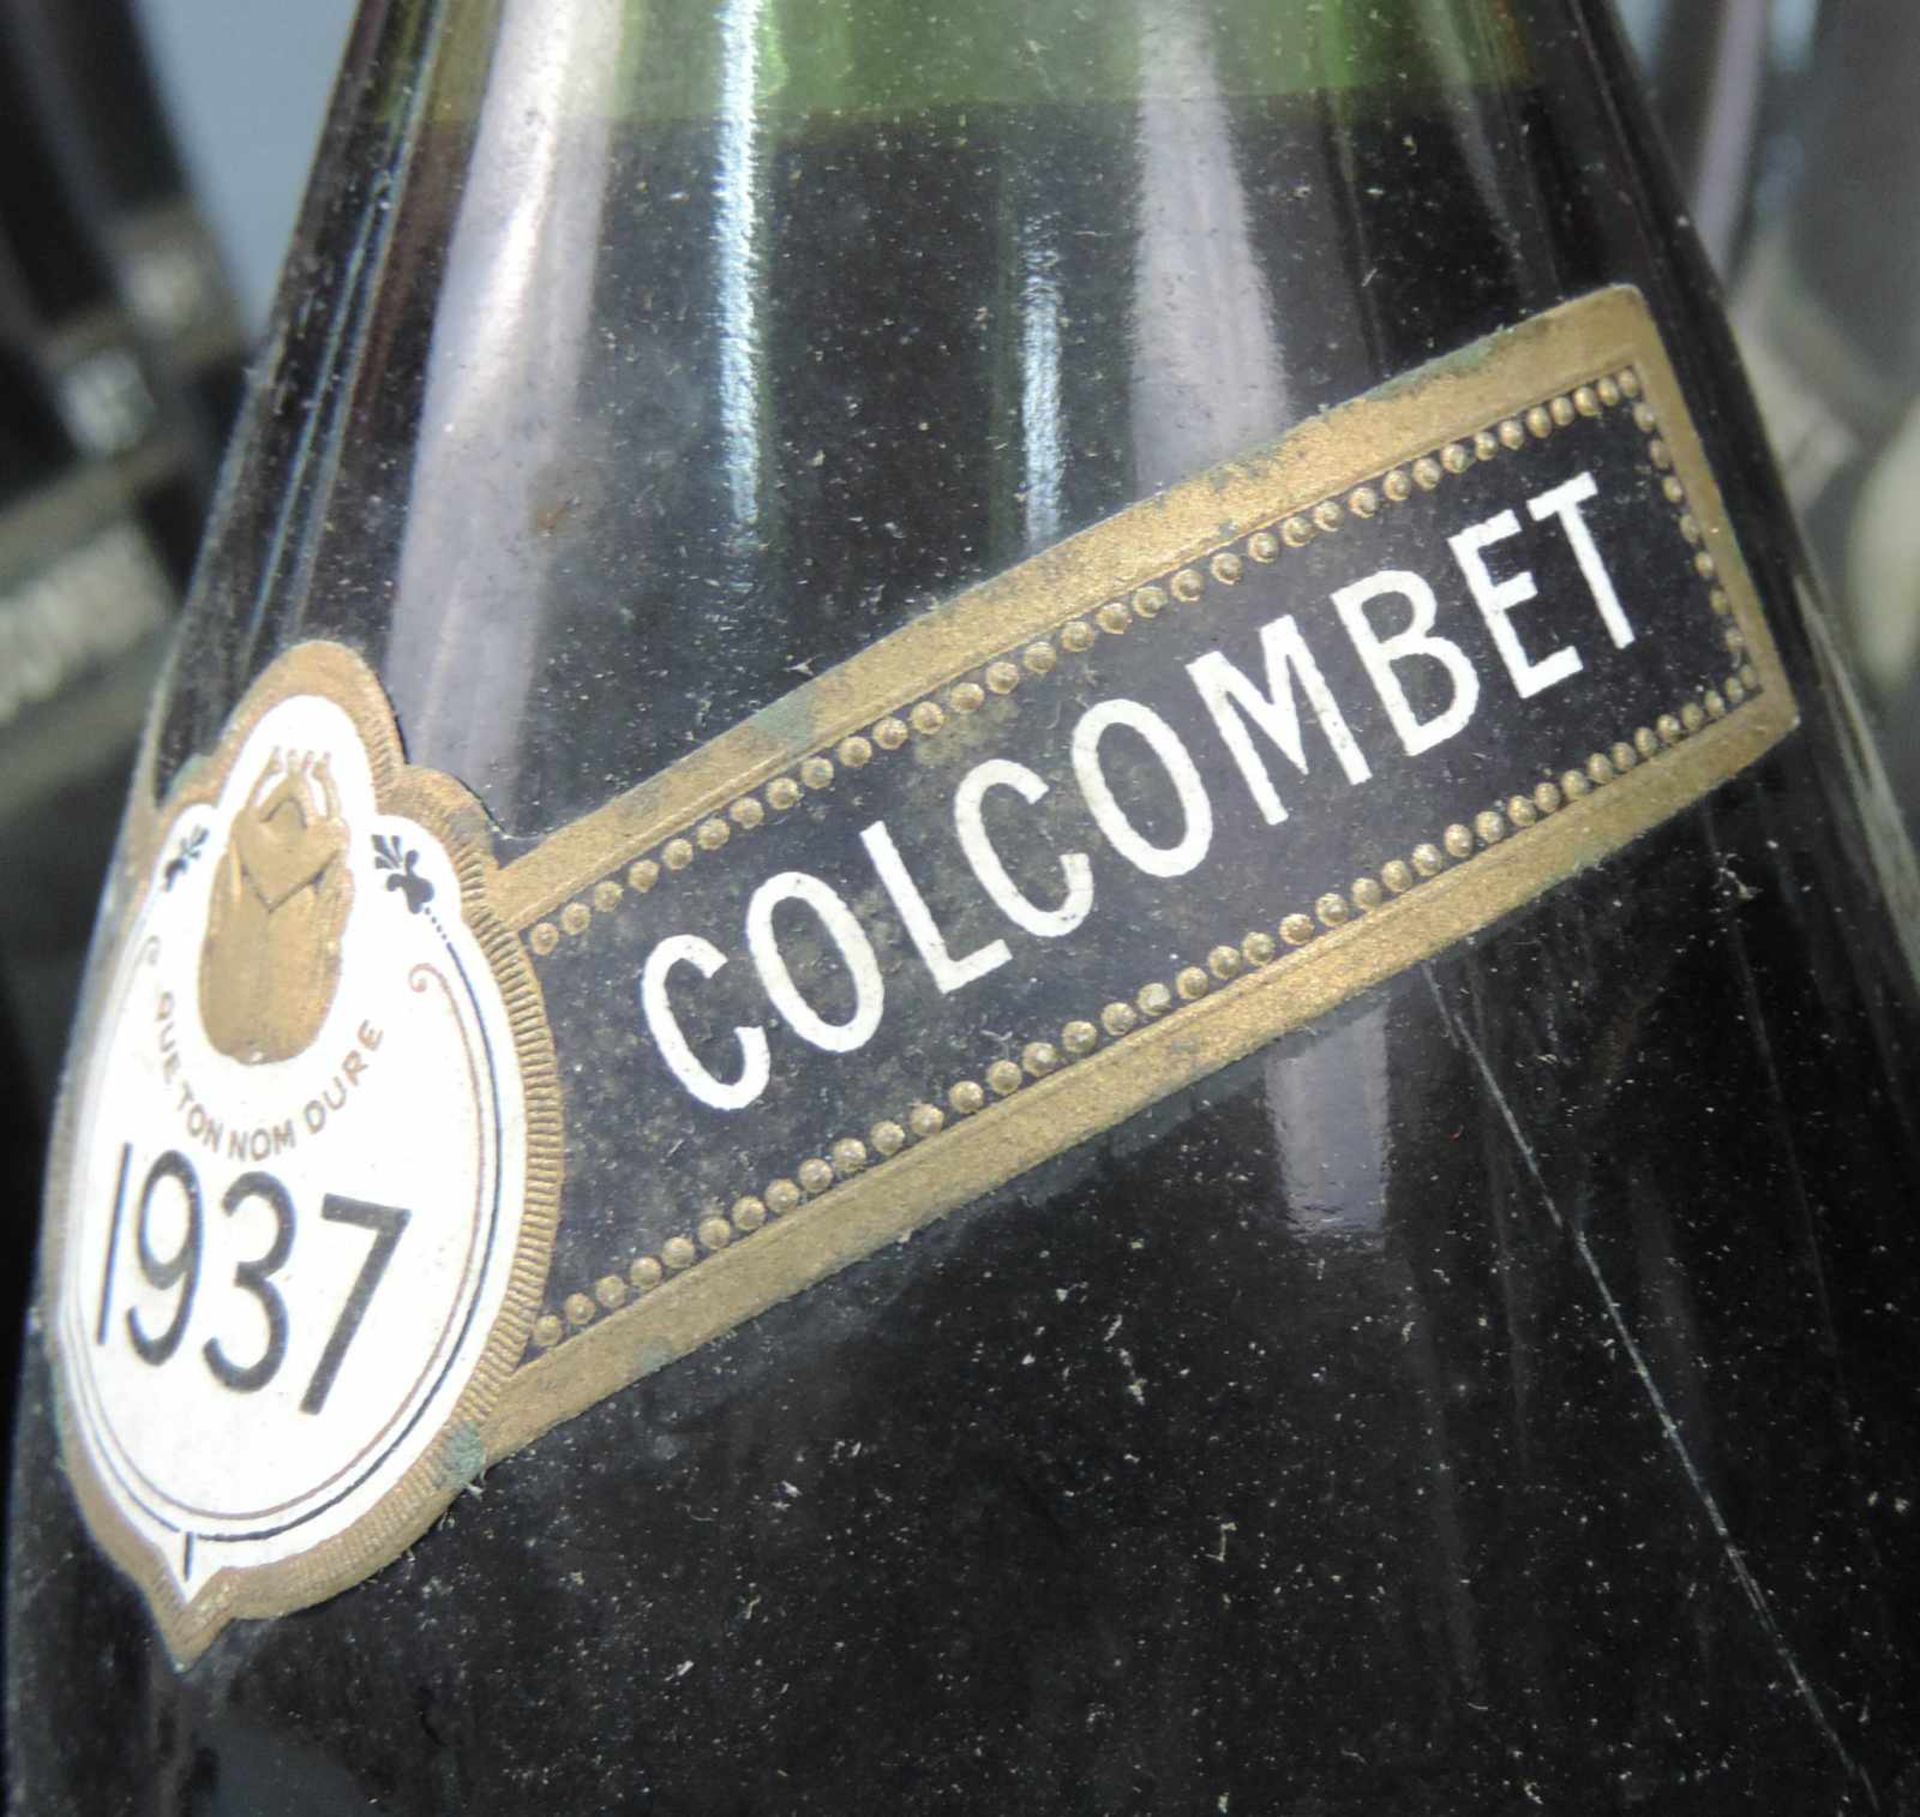 1937 Bourgogne AC von Colcombet Frères, caves à Nuits St. Georges. 49 ganze Flaschen. Reserve - Image 7 of 12